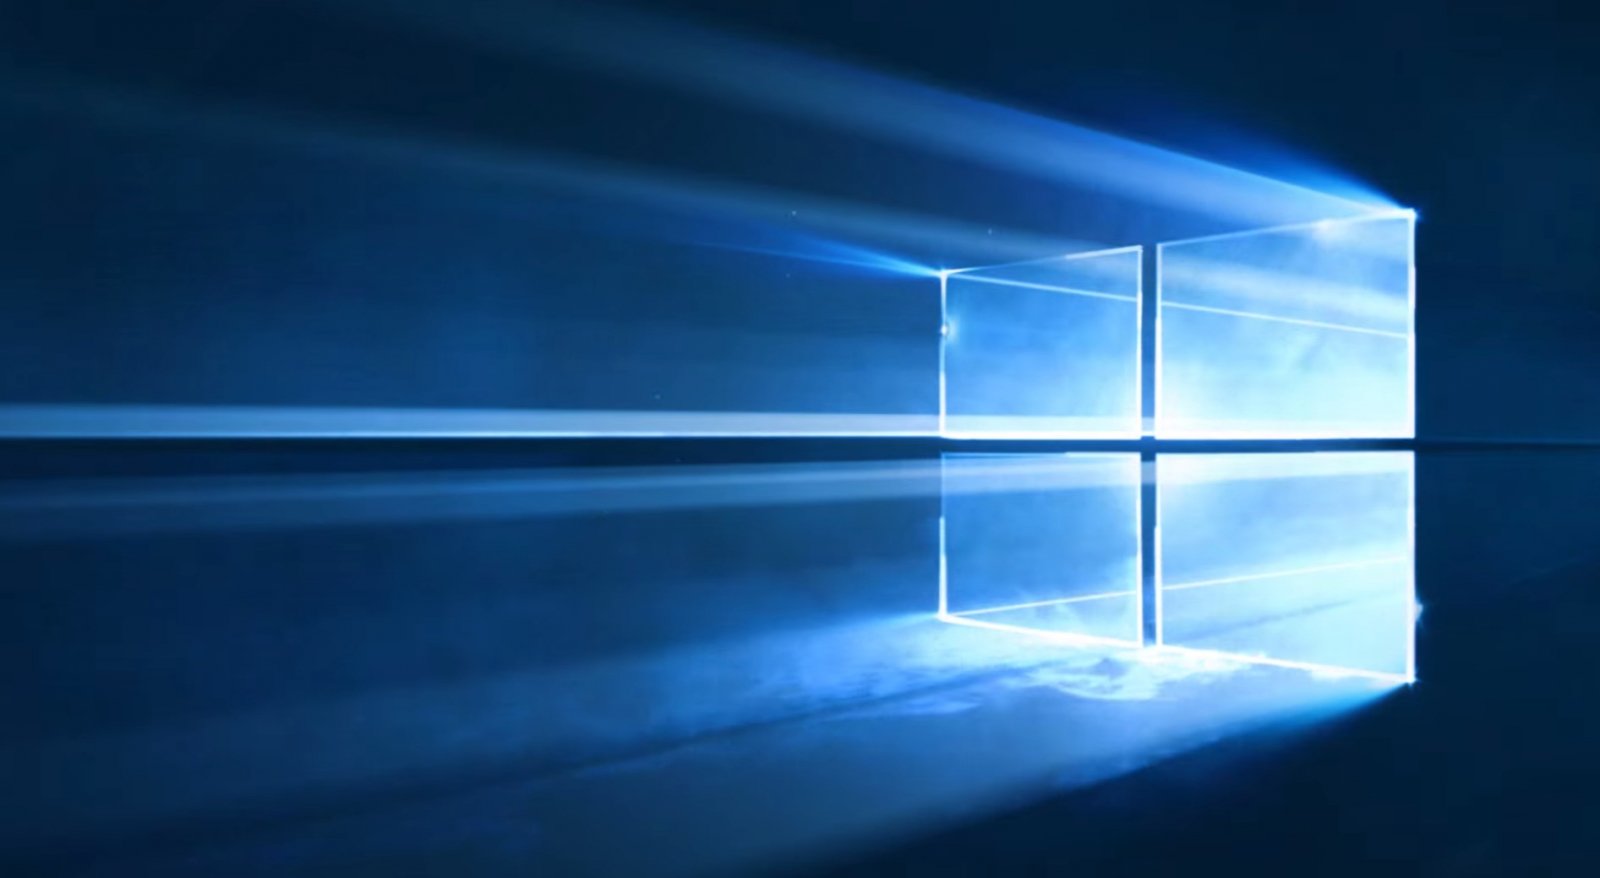 H Microsoft προσθέτει στα Windows 10 το “Ultimate Performance" mode για "pros"